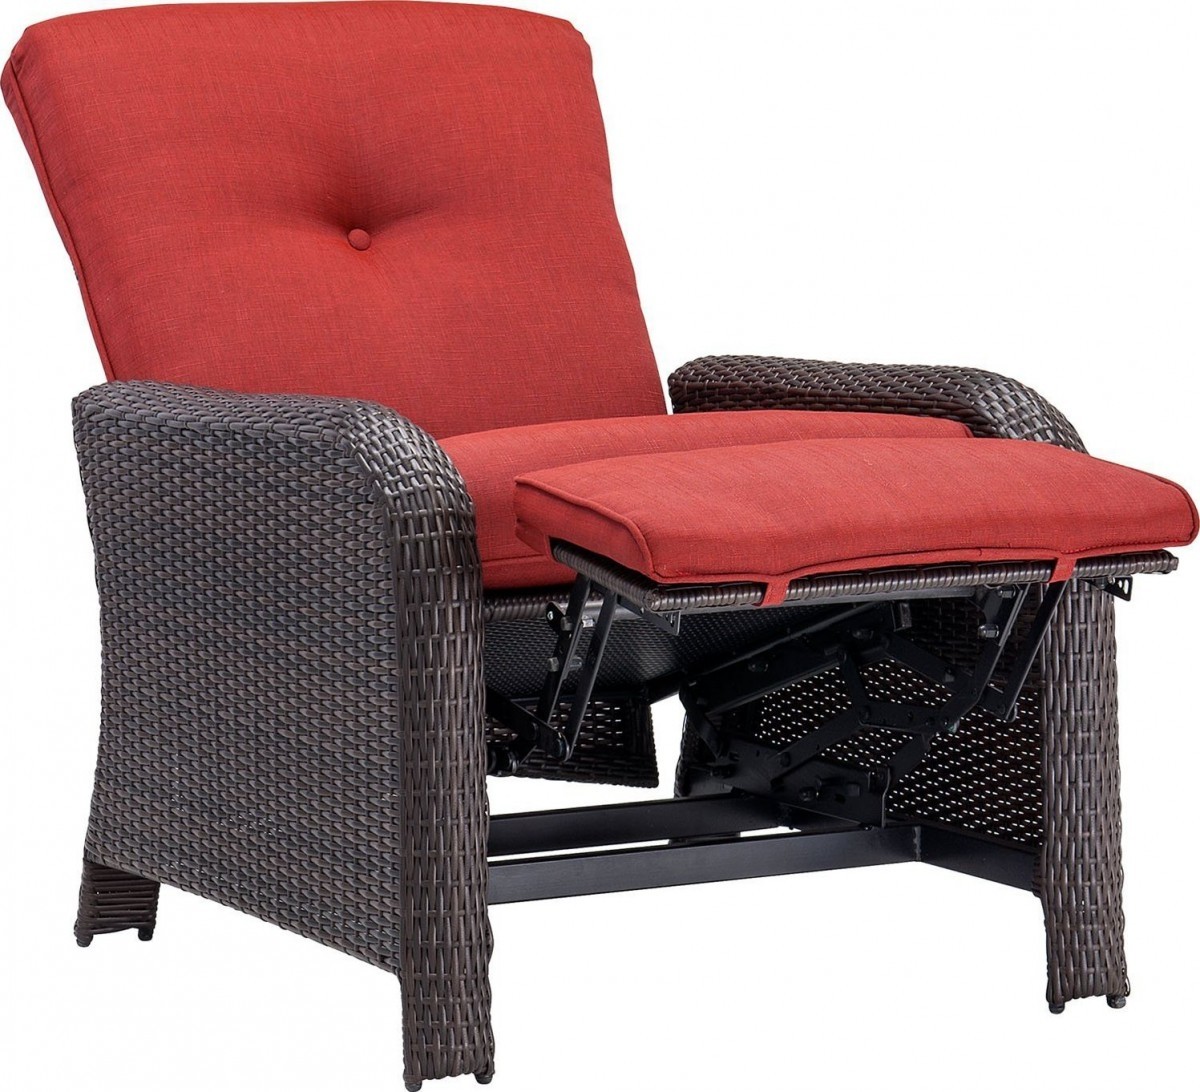 Hanover strathmere luxury wicker outdoor recliner chair 3